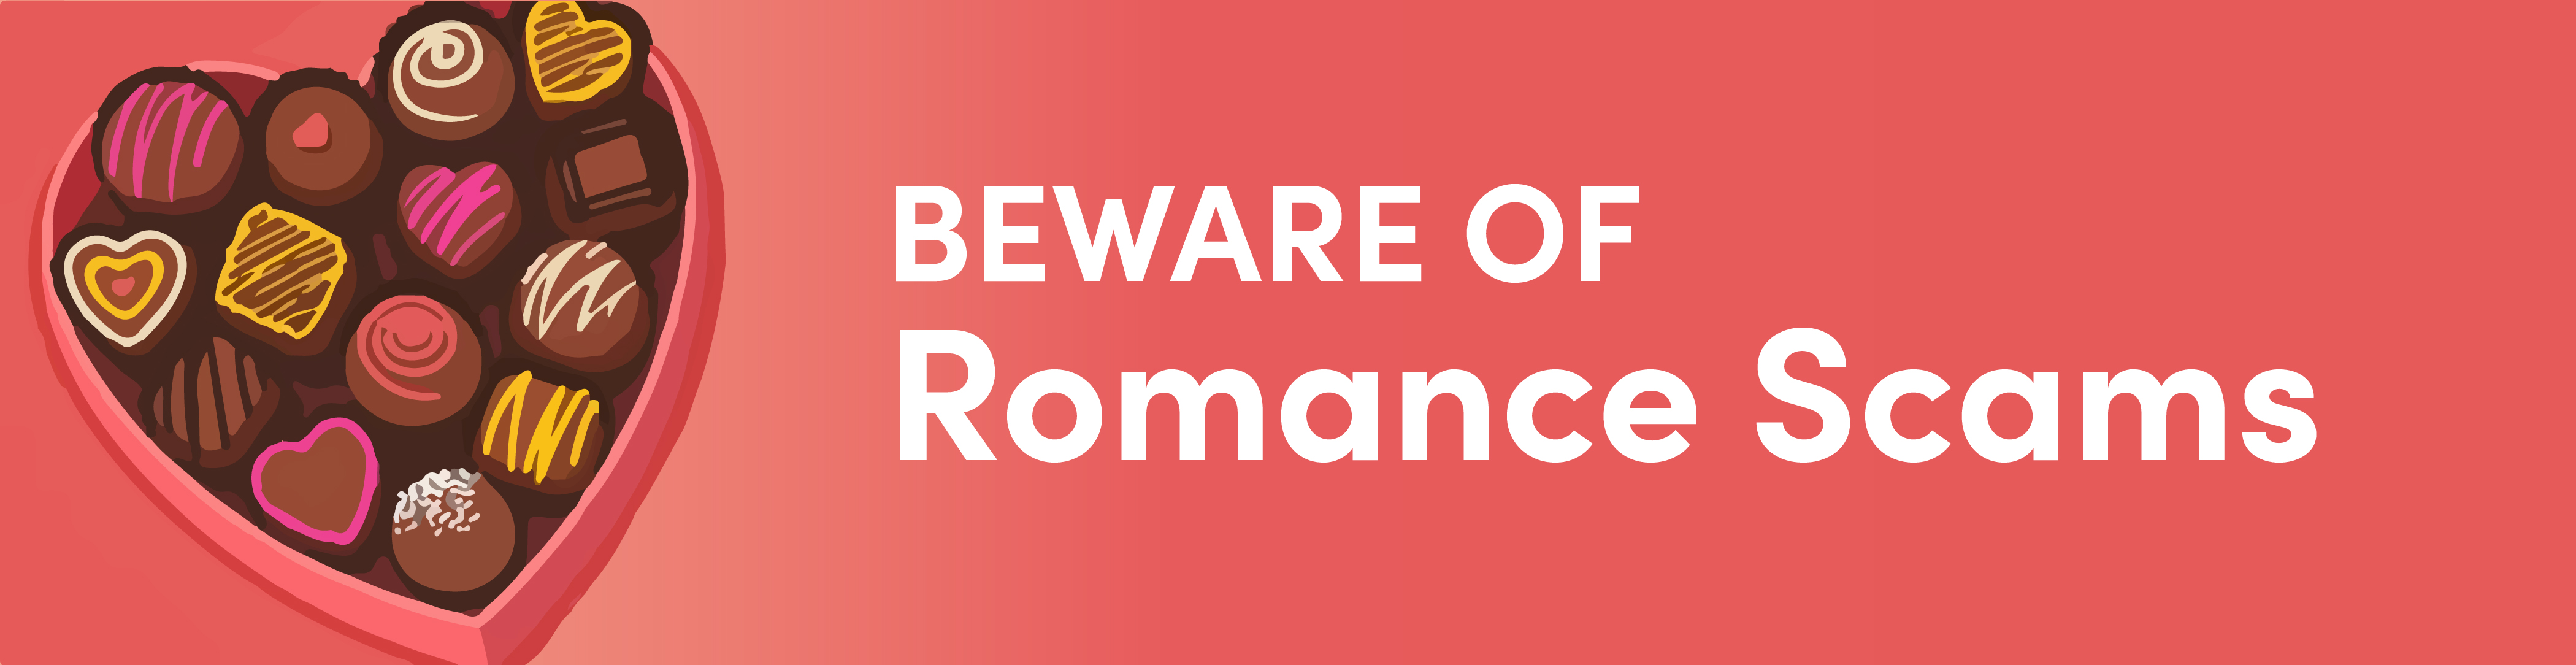 Beware of romance scams